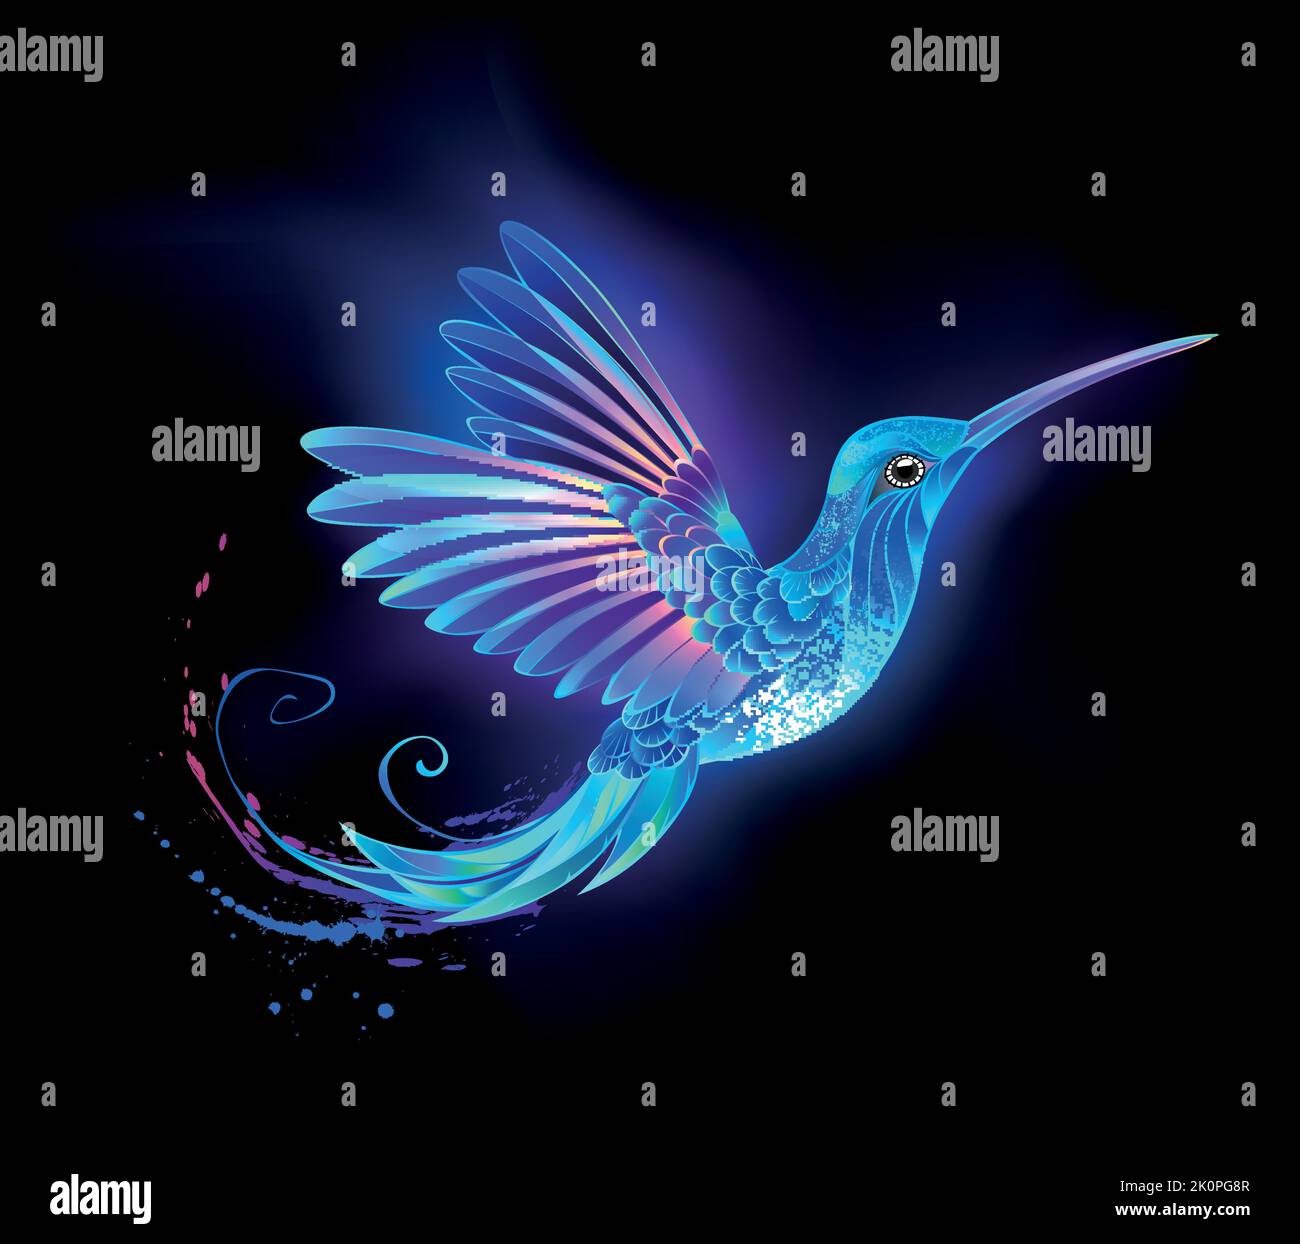 Flying, neon, blue, detailed, glowing hummingbird with purple wings on black background. Glowwave. Stock Vector